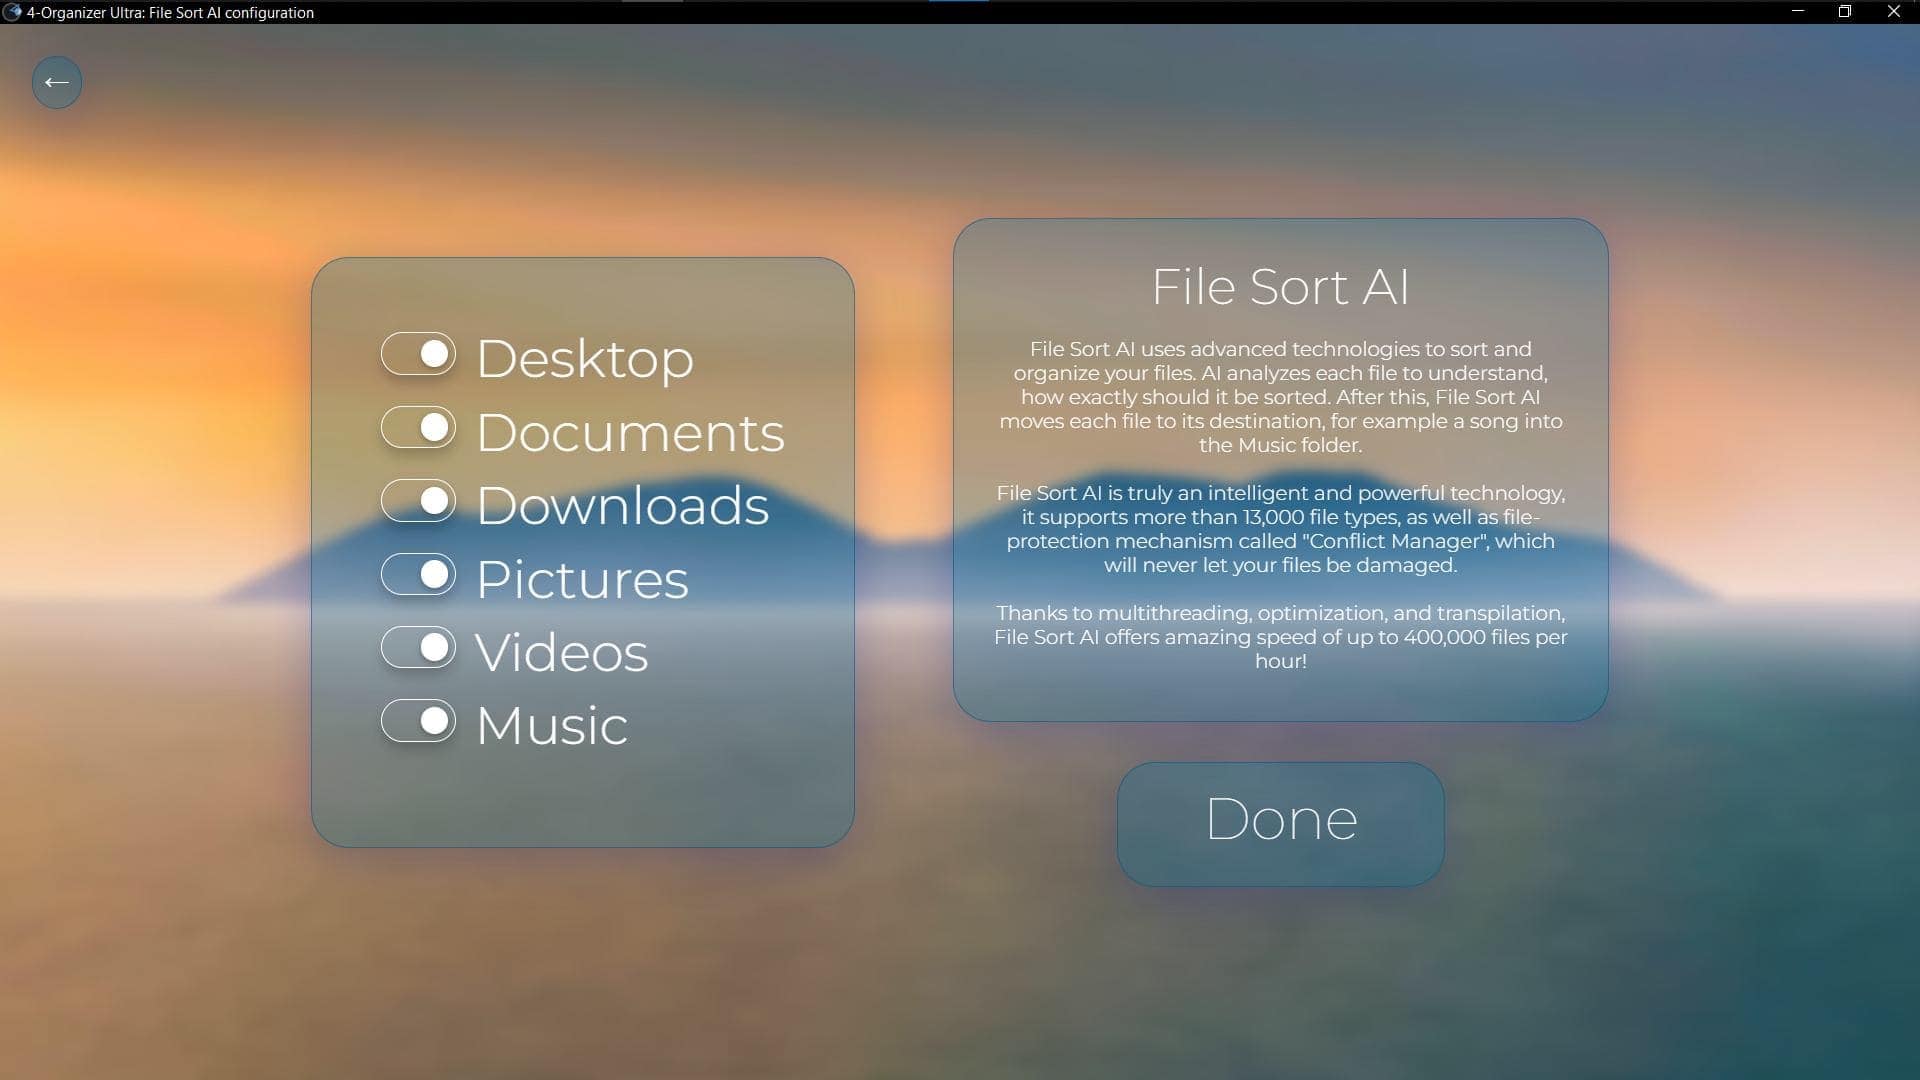 Screenshot of 'File Sort AI configuration' window of 4-Organizer Ultra